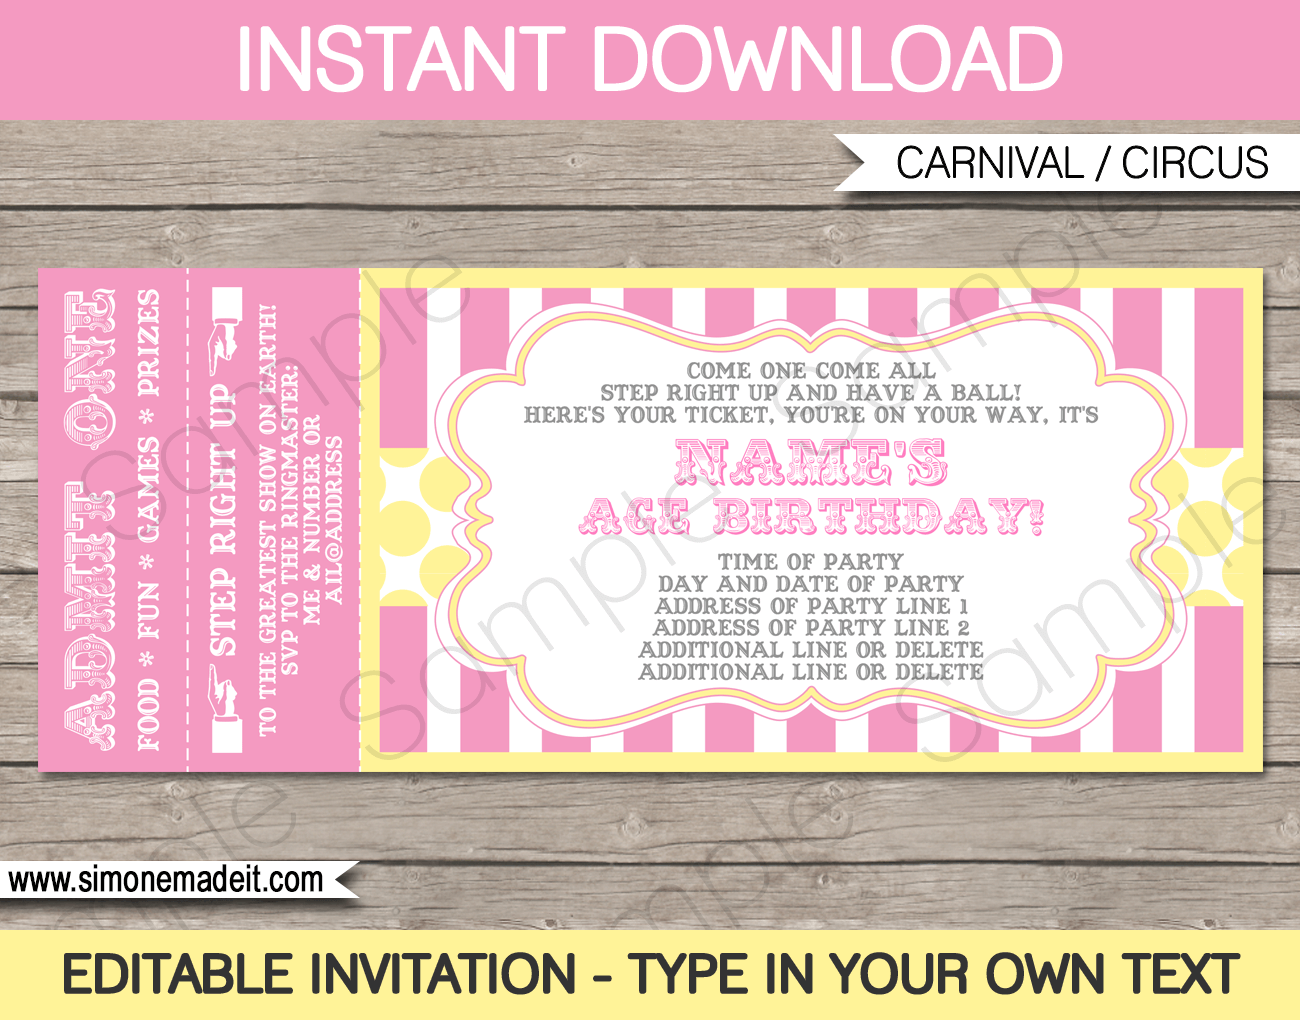 printable baseball ticket wedding invitations